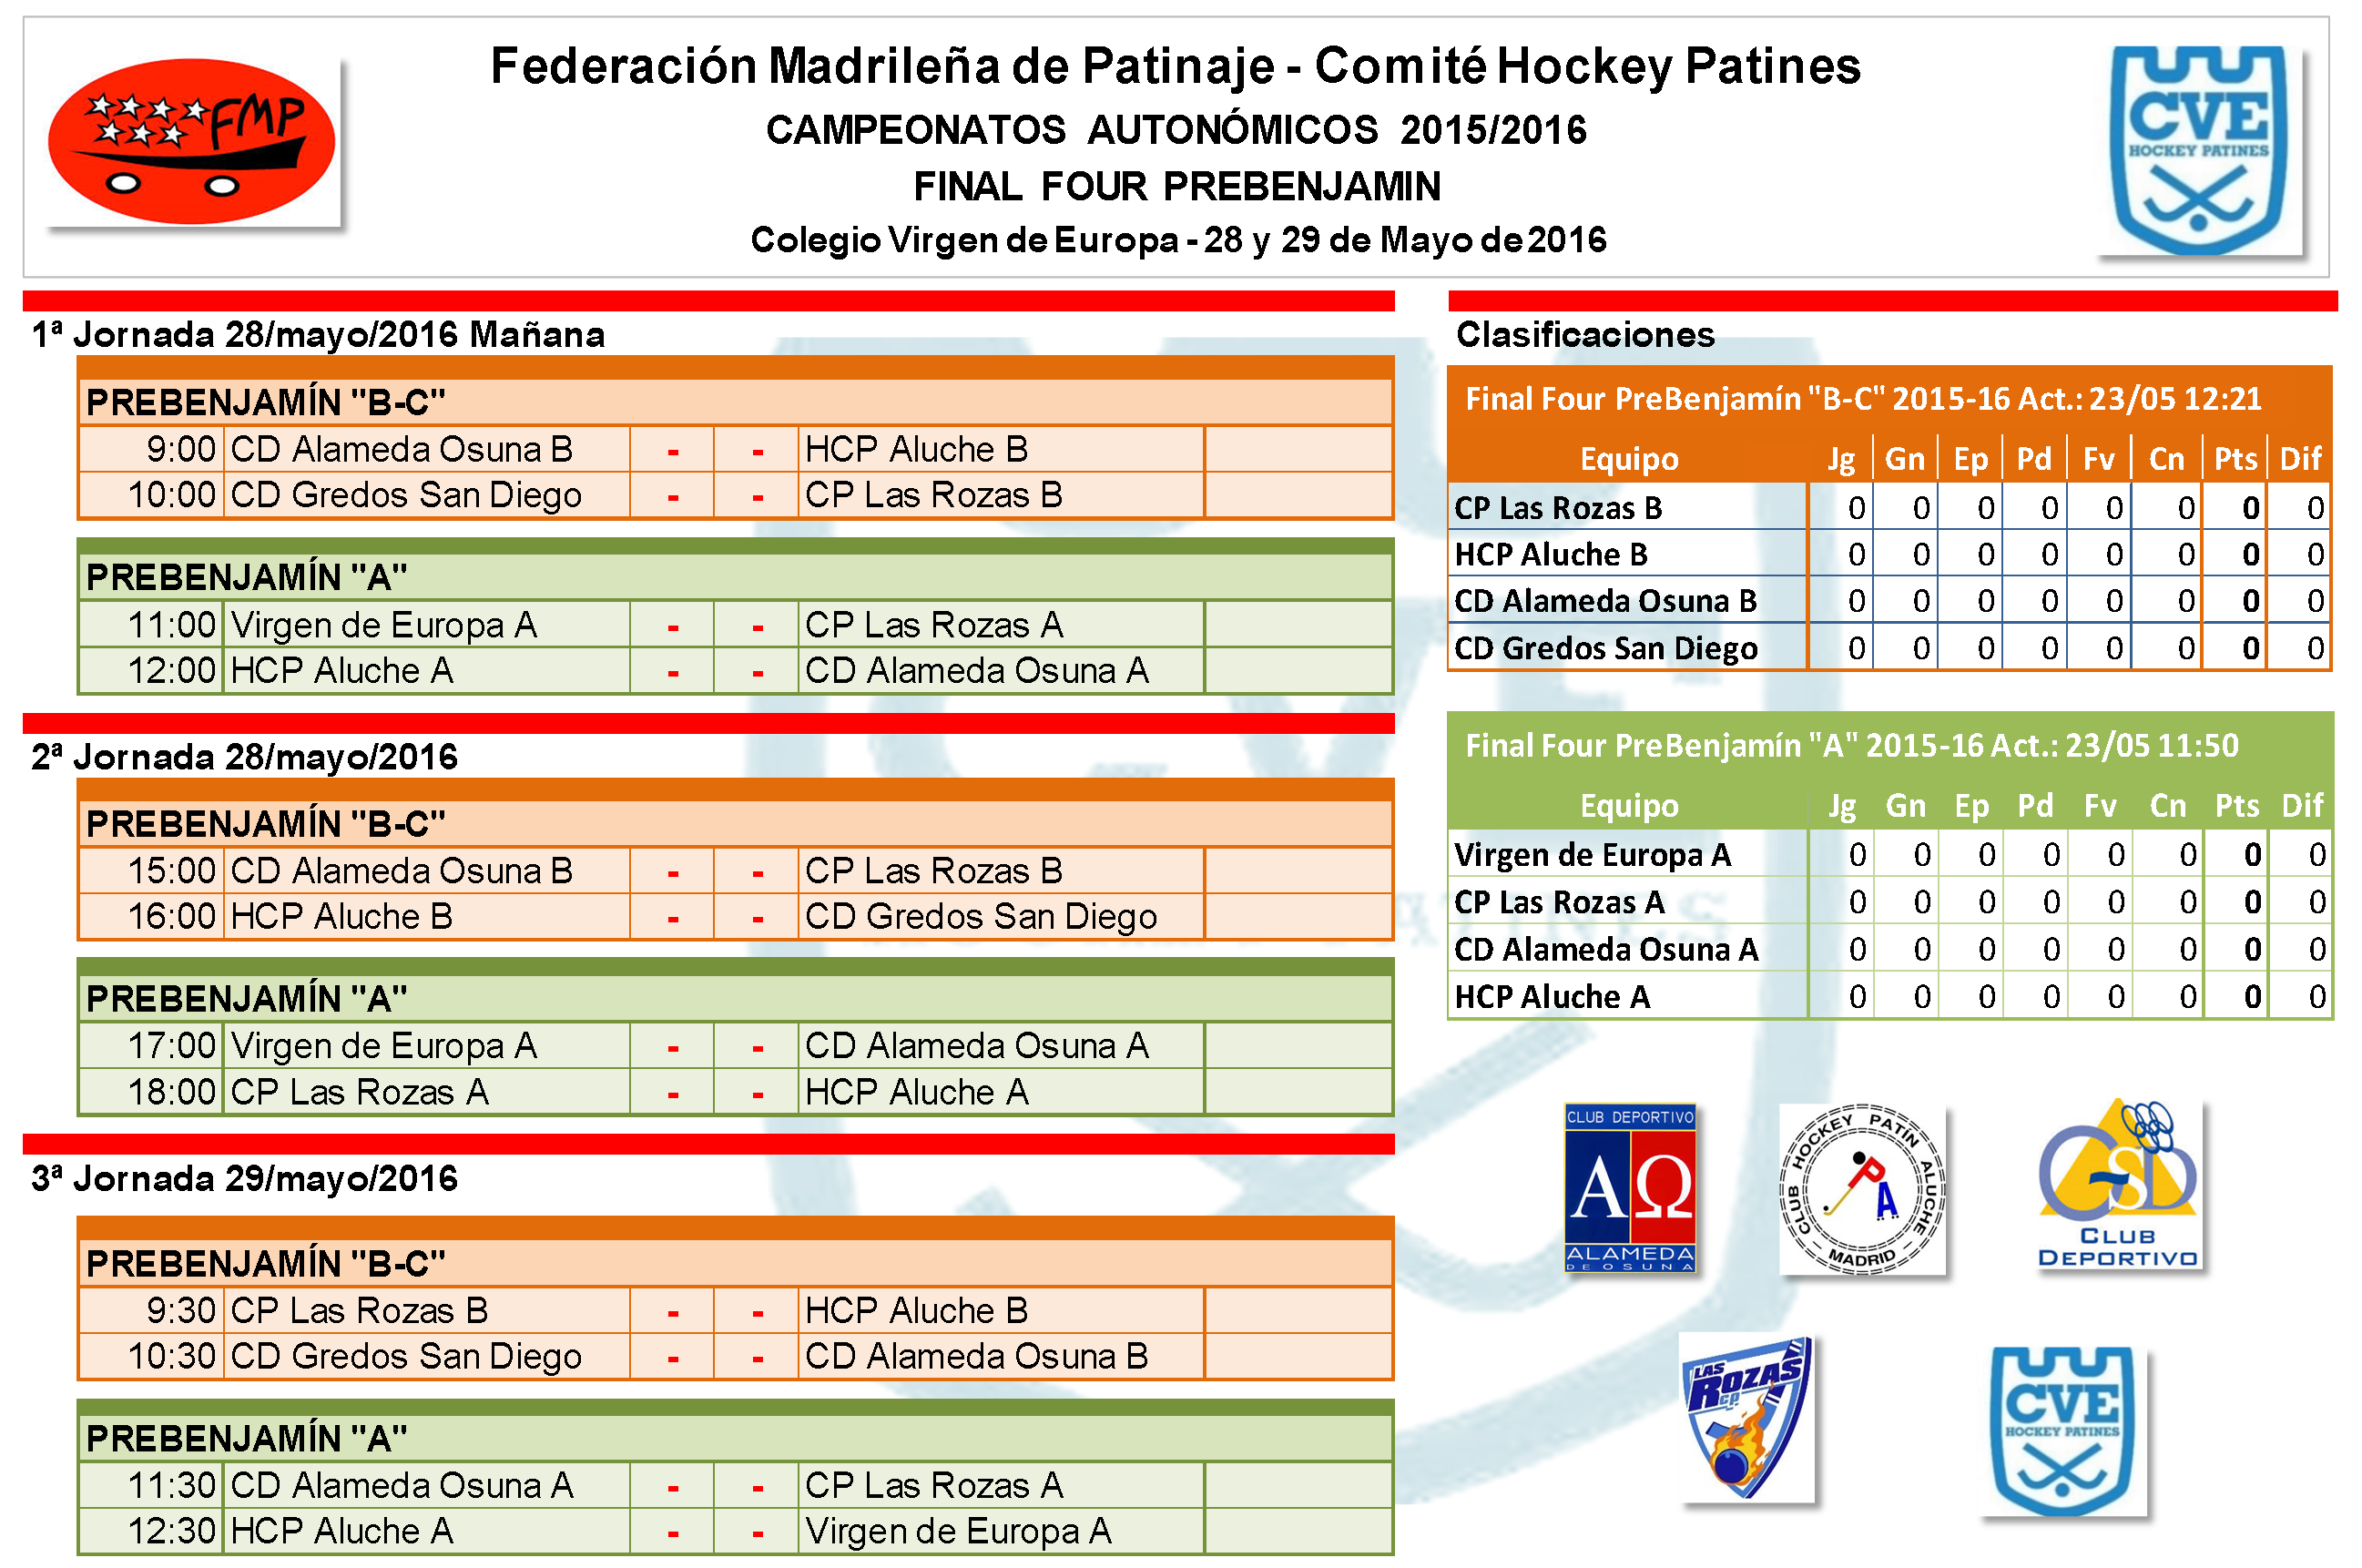 Campeonatos autonómicos de hockey patines. Final Four Virgen de Europa